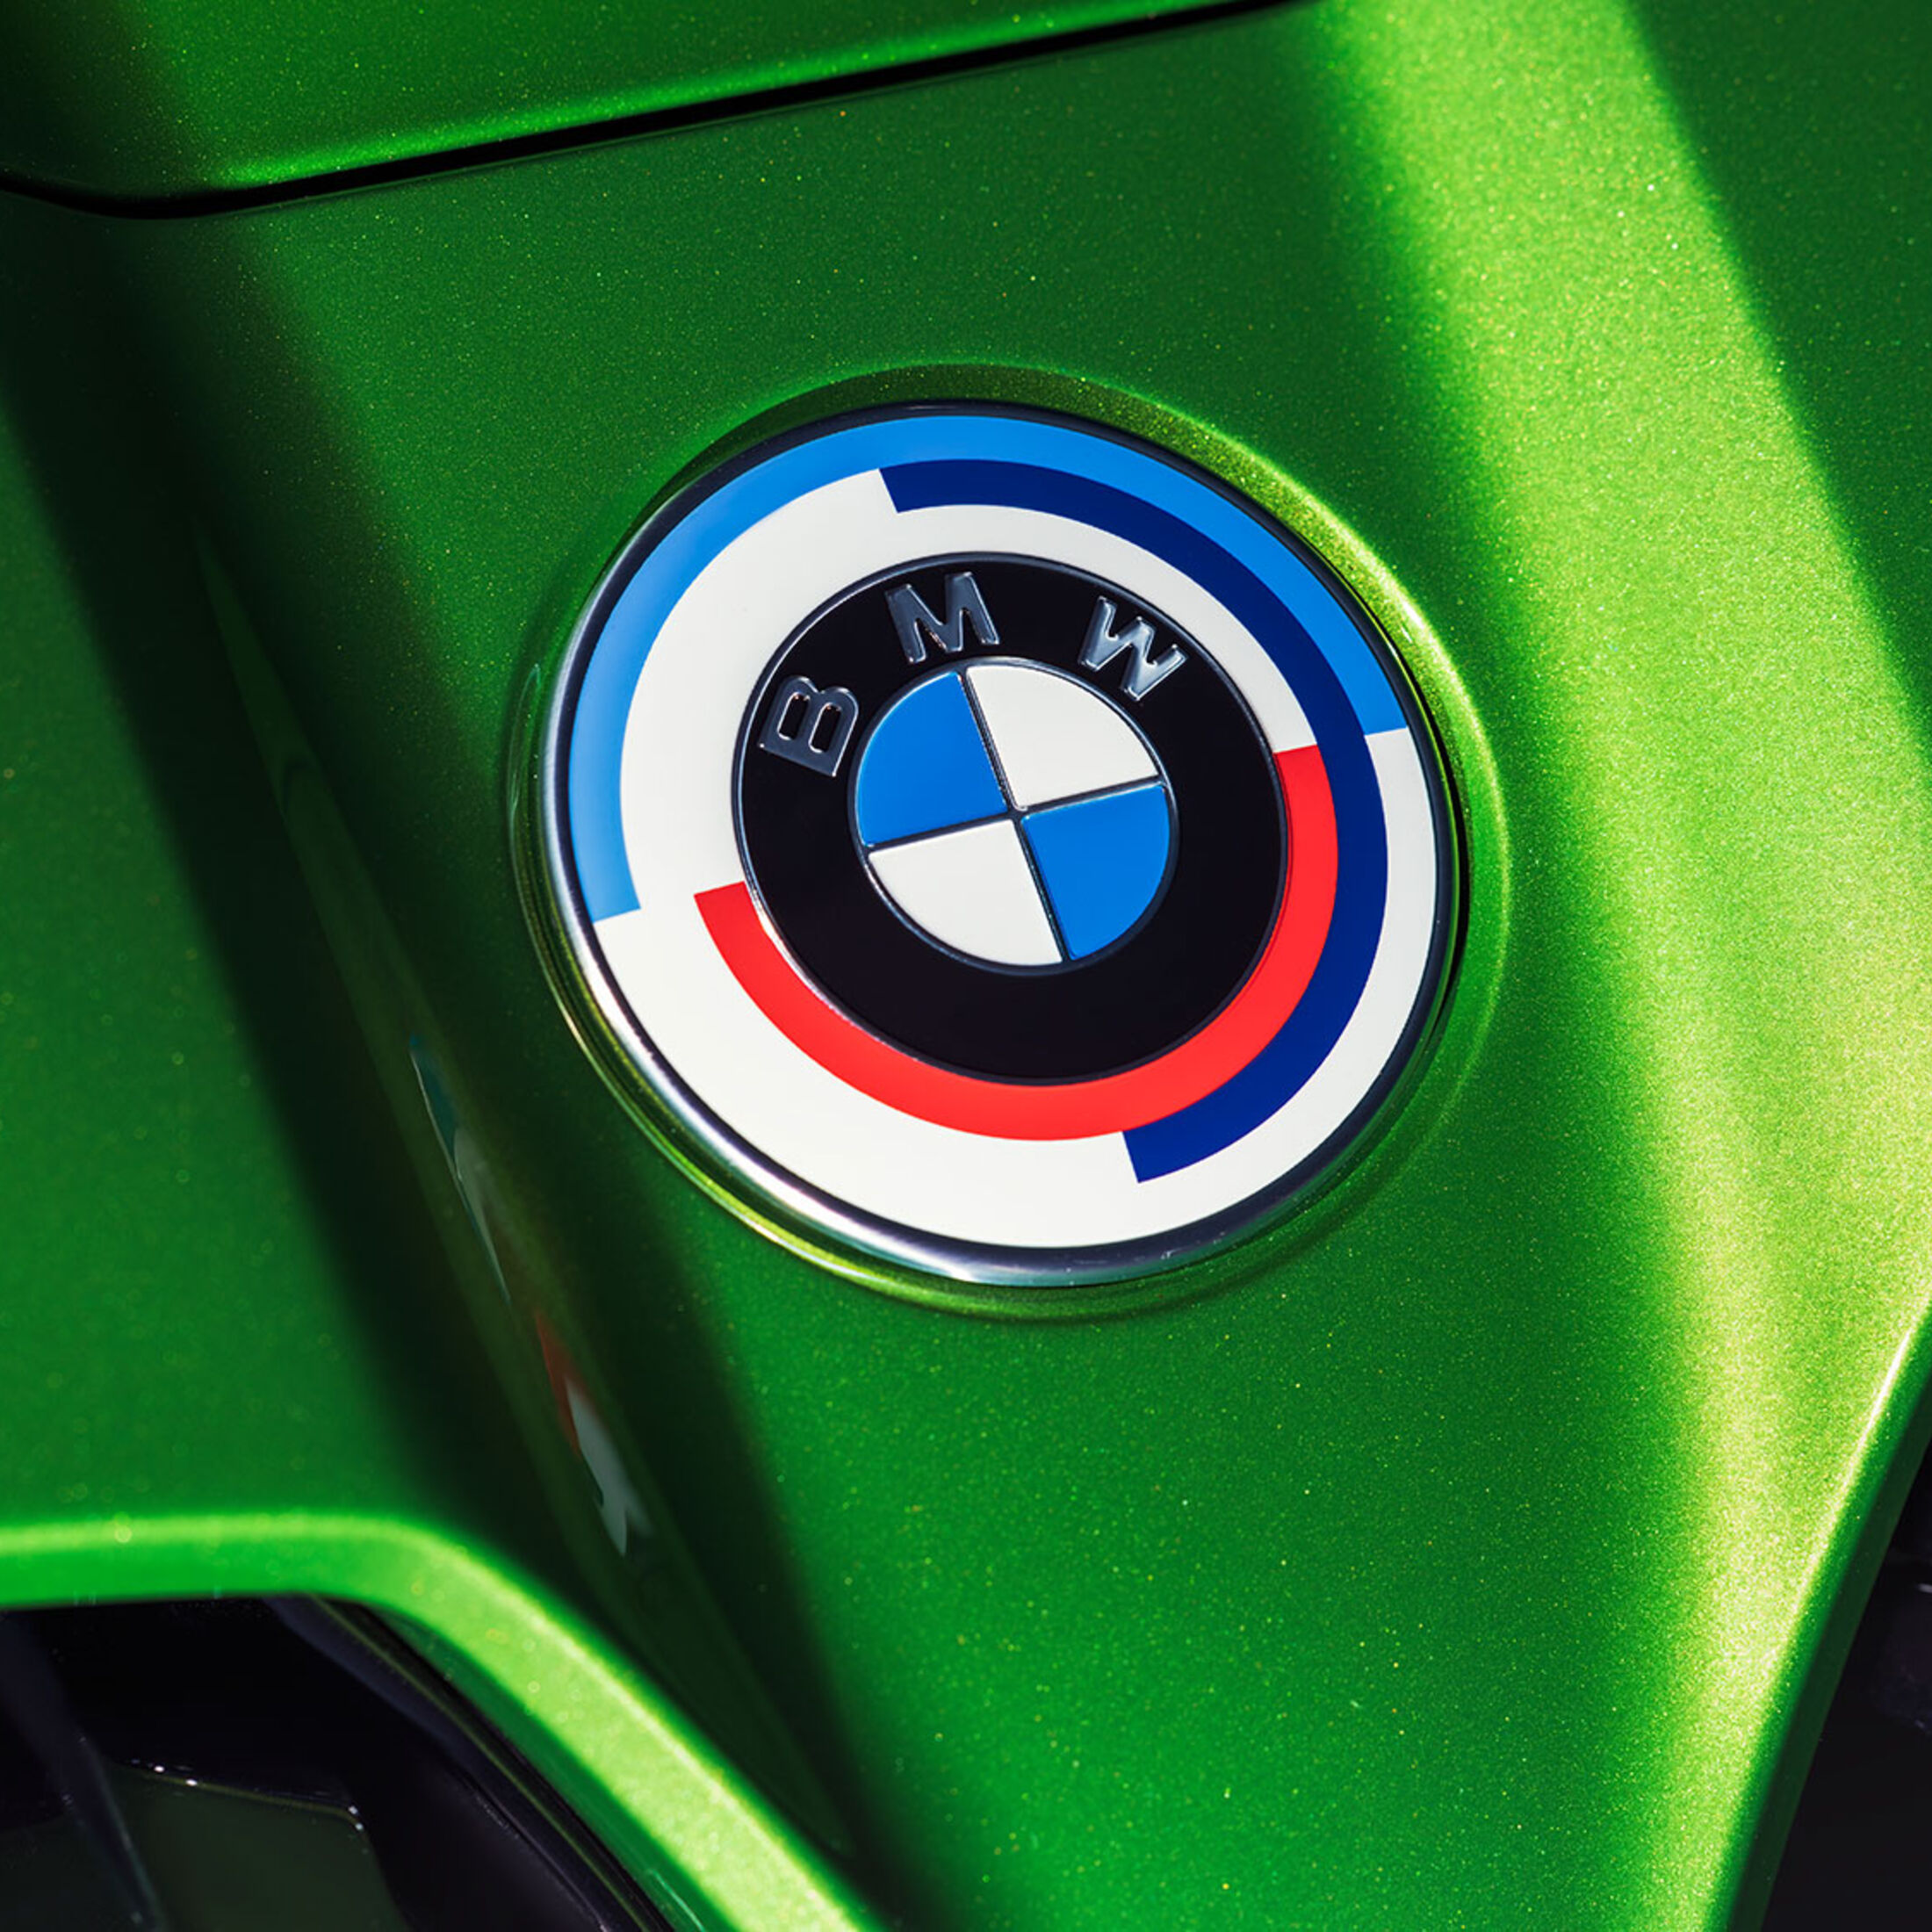 https://imgr1.auto-motor-und-sport.de/BMW-Motorsport-Emblem-jsonLd1x1-1a1a6eee-1853589.jpg